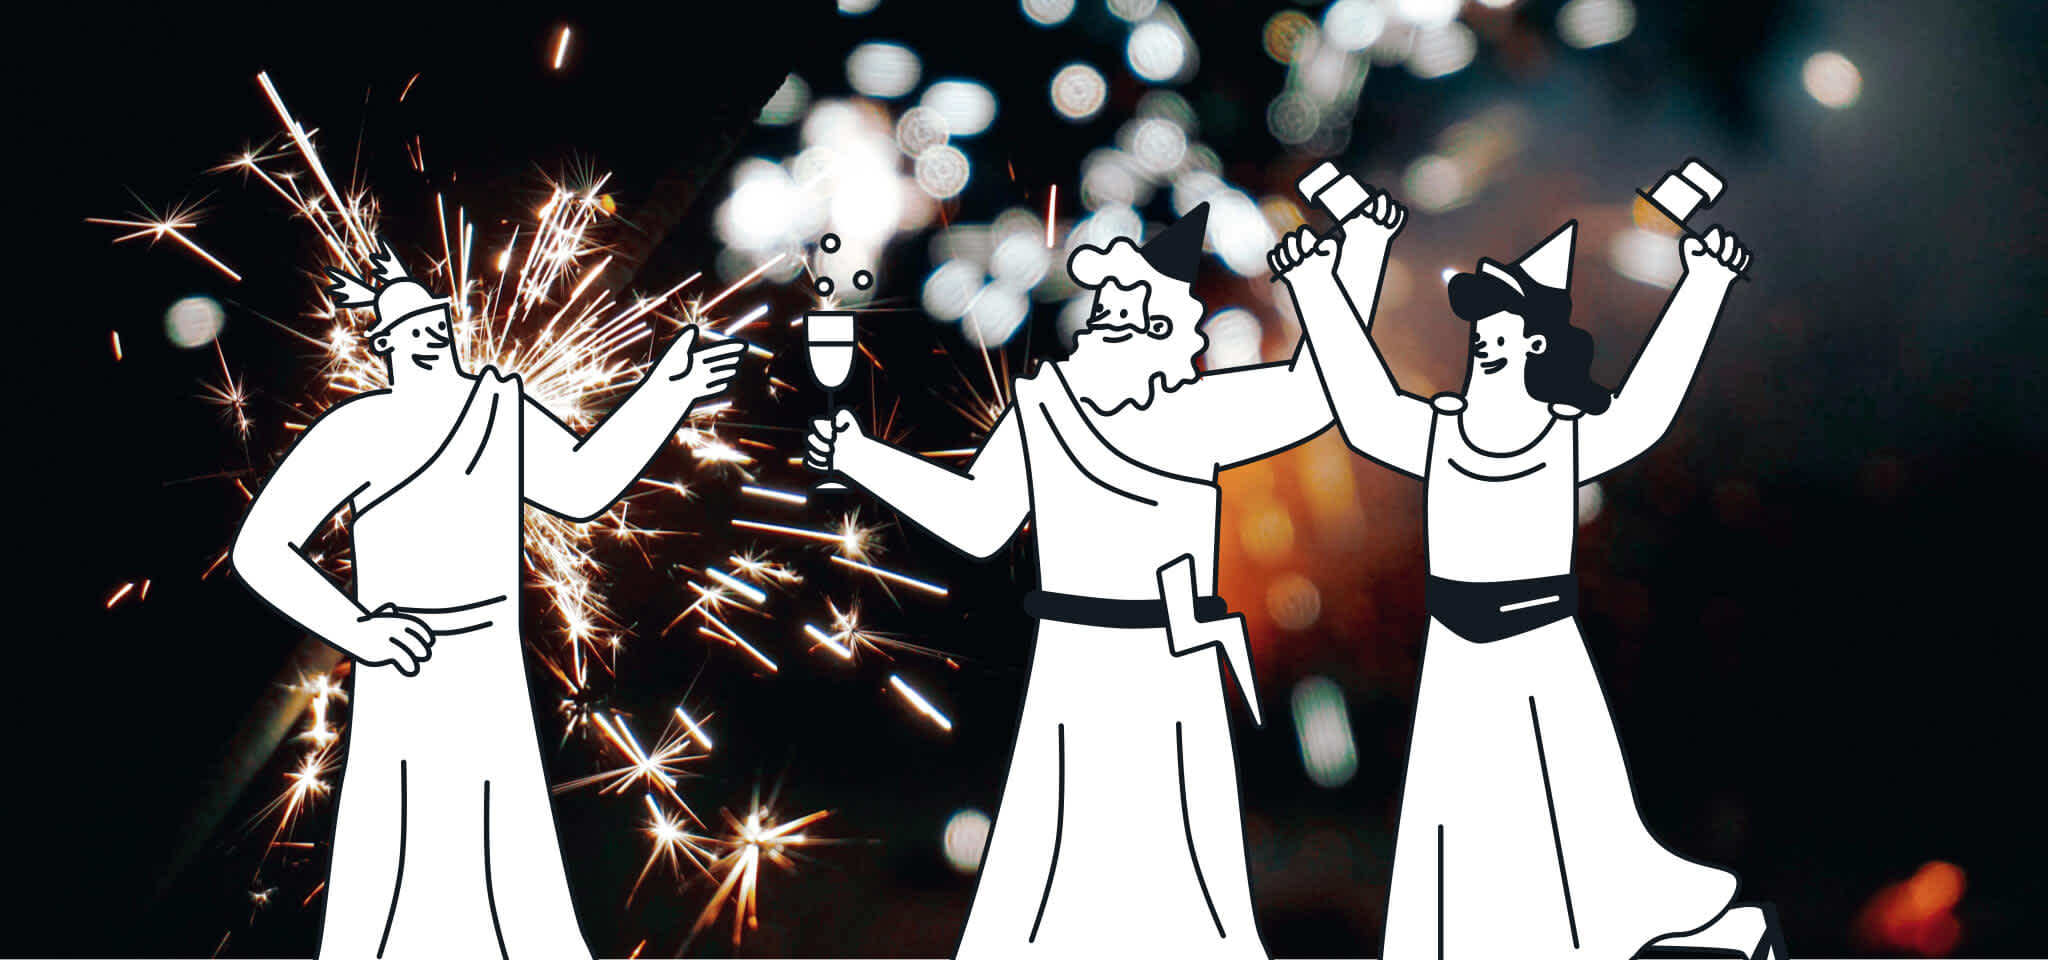 3 gods celebrating with sparklers in background